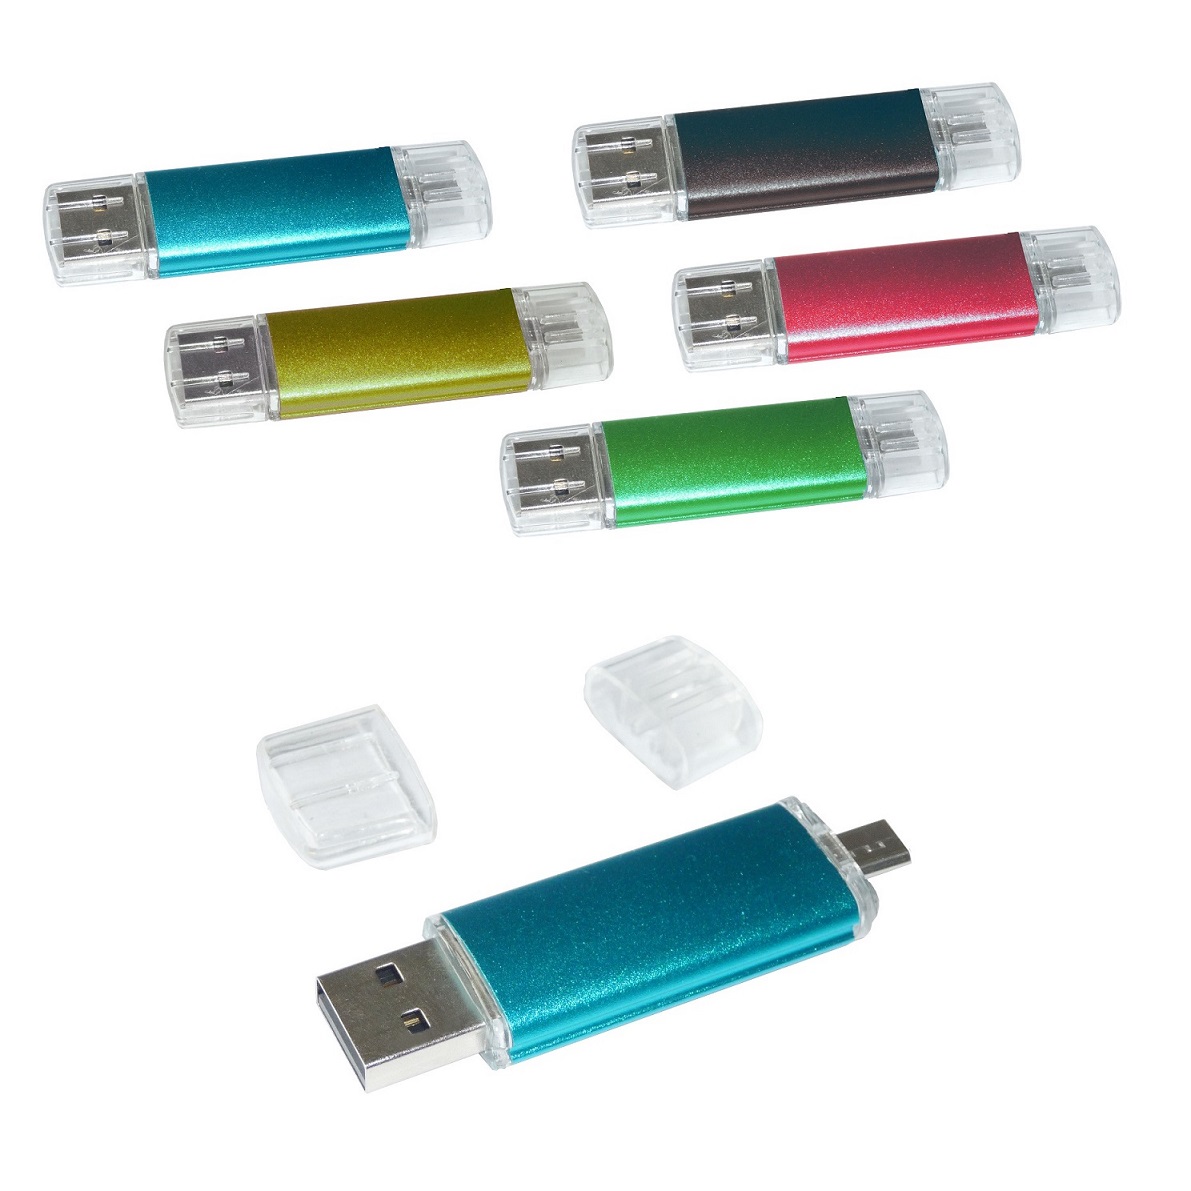 GL-AAA1015 1GB USB Flash Drive with Micro Adapter